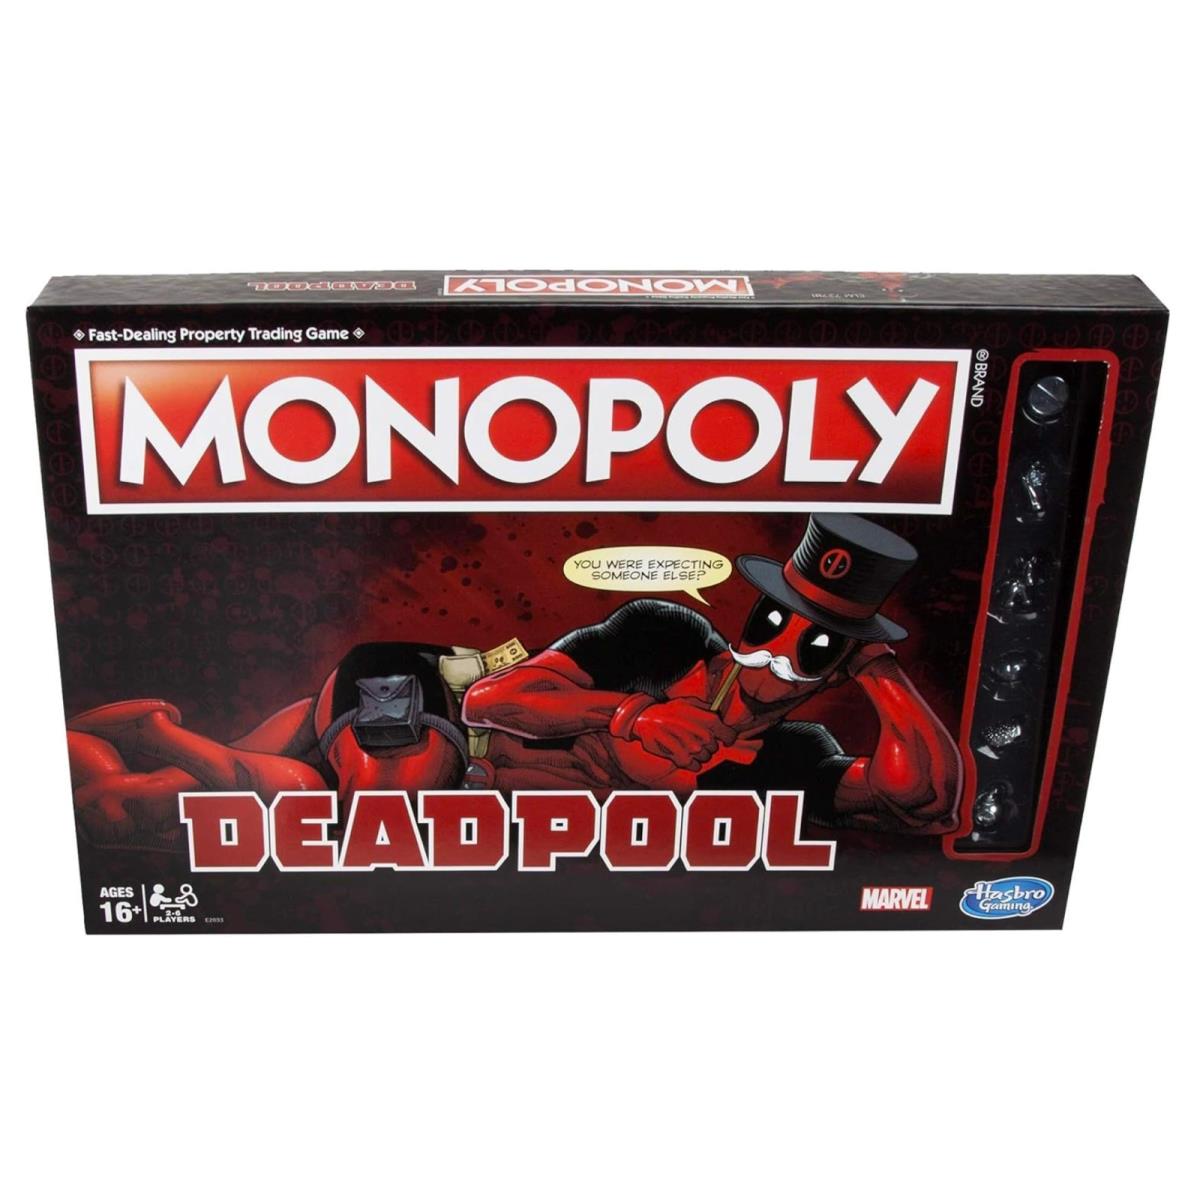 Monopoly - Deadpool Edition - Marvel - Hasbro